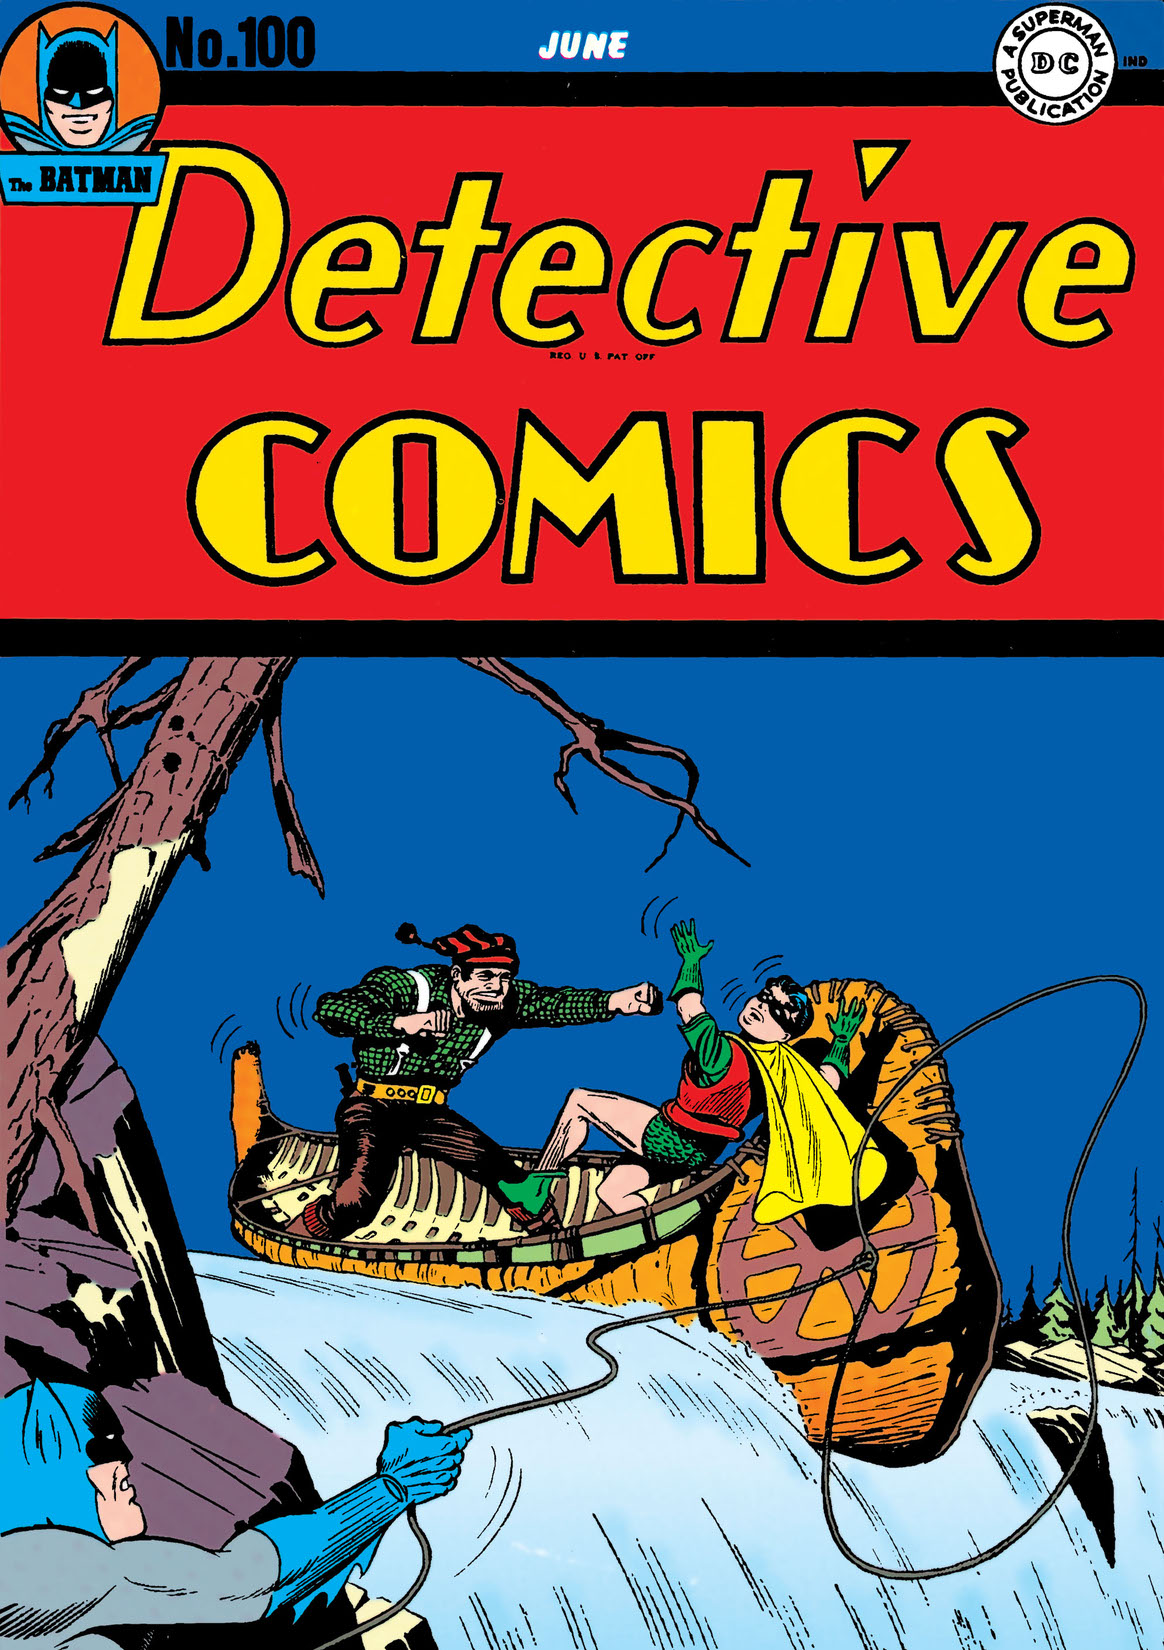 Detective Comics (1937-) #100 preview images